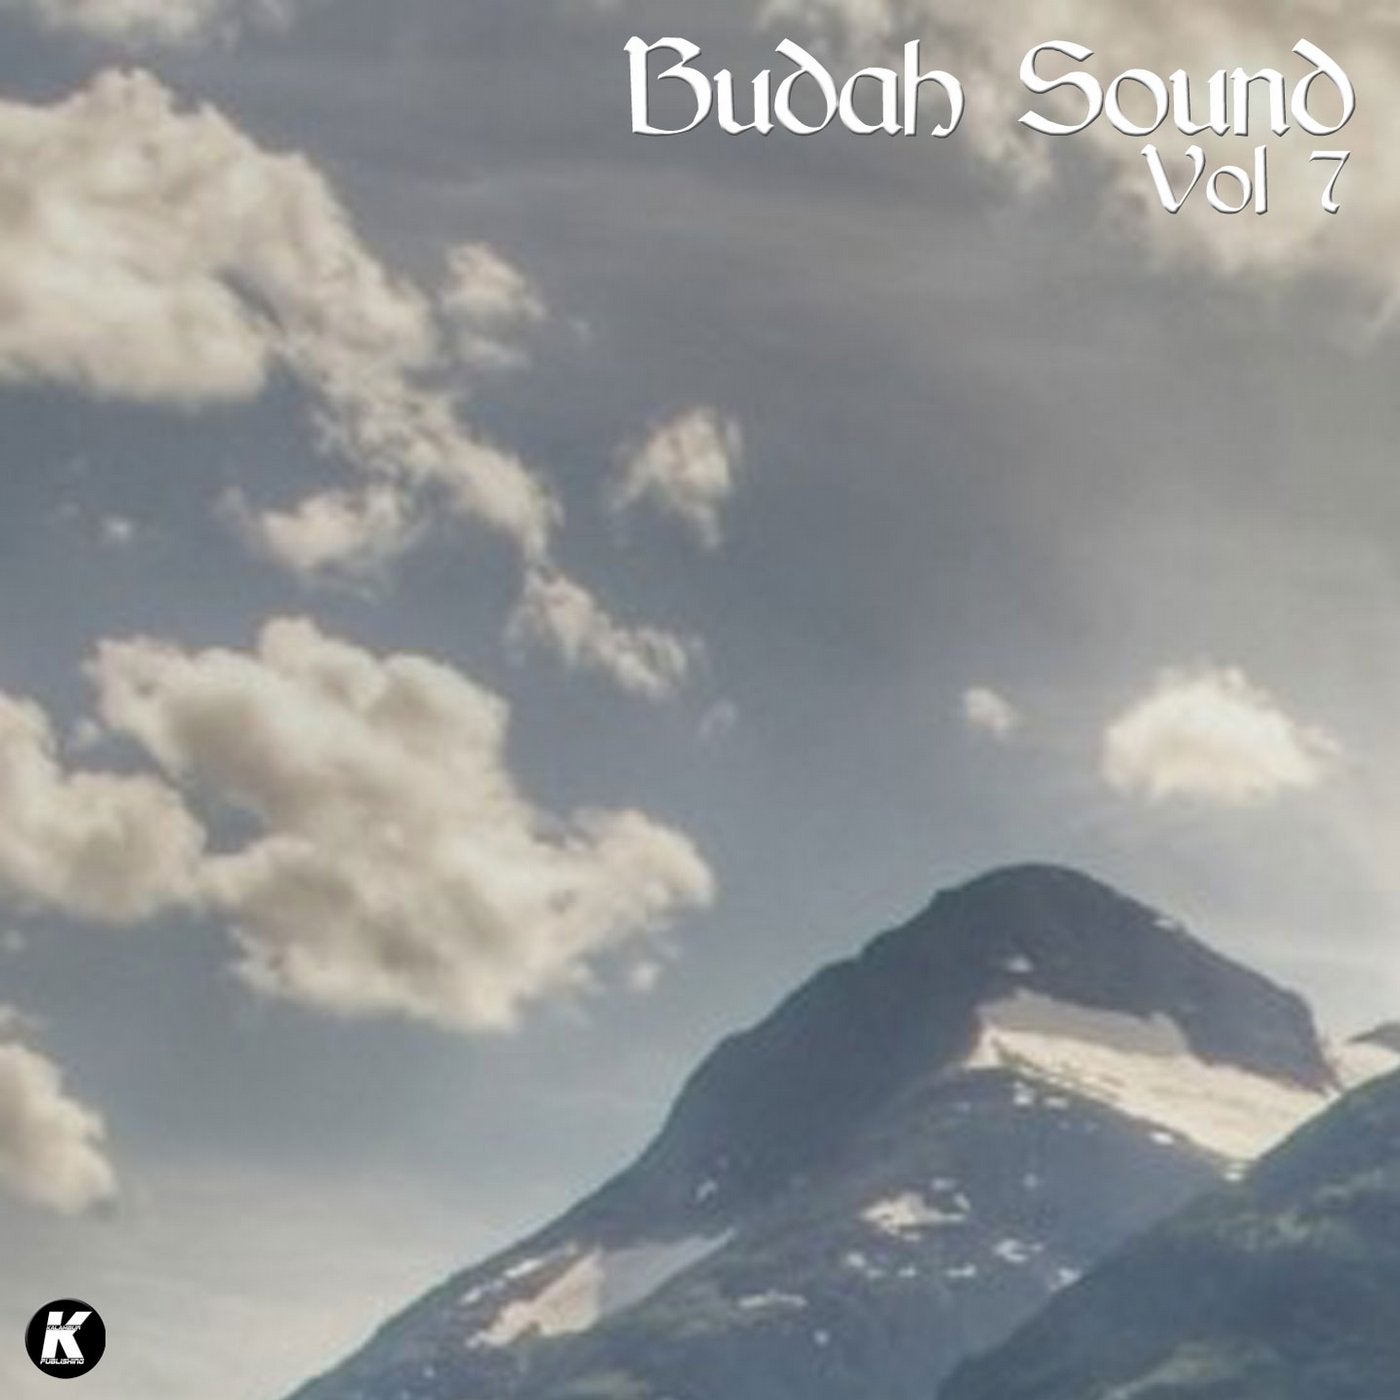 Budah Sound, Vol. 7